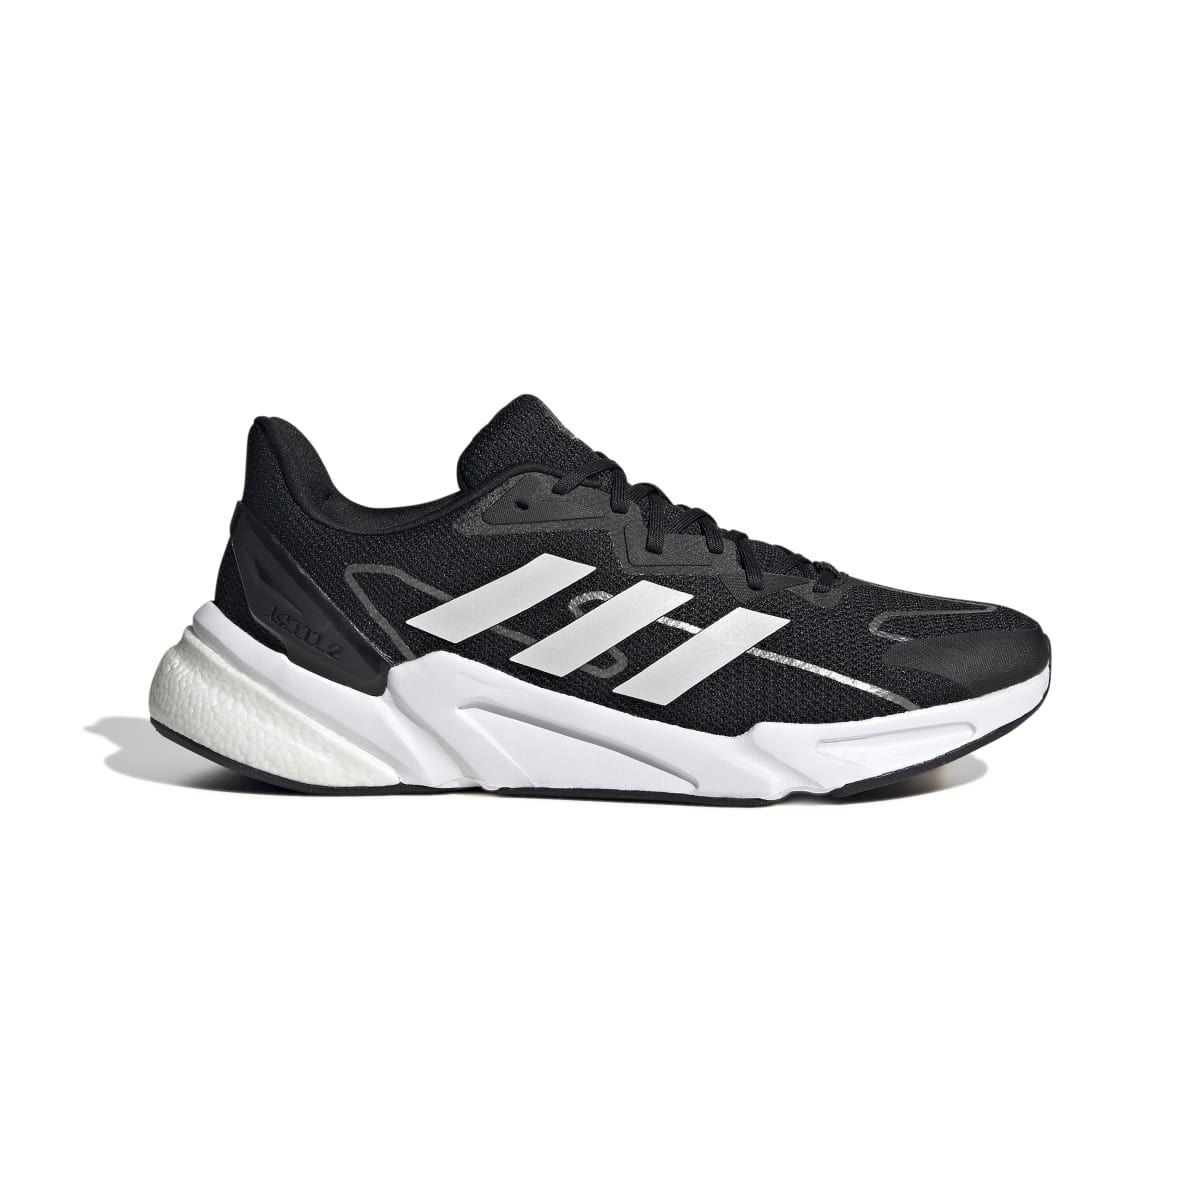 Mens X9000L2 Running Shoes